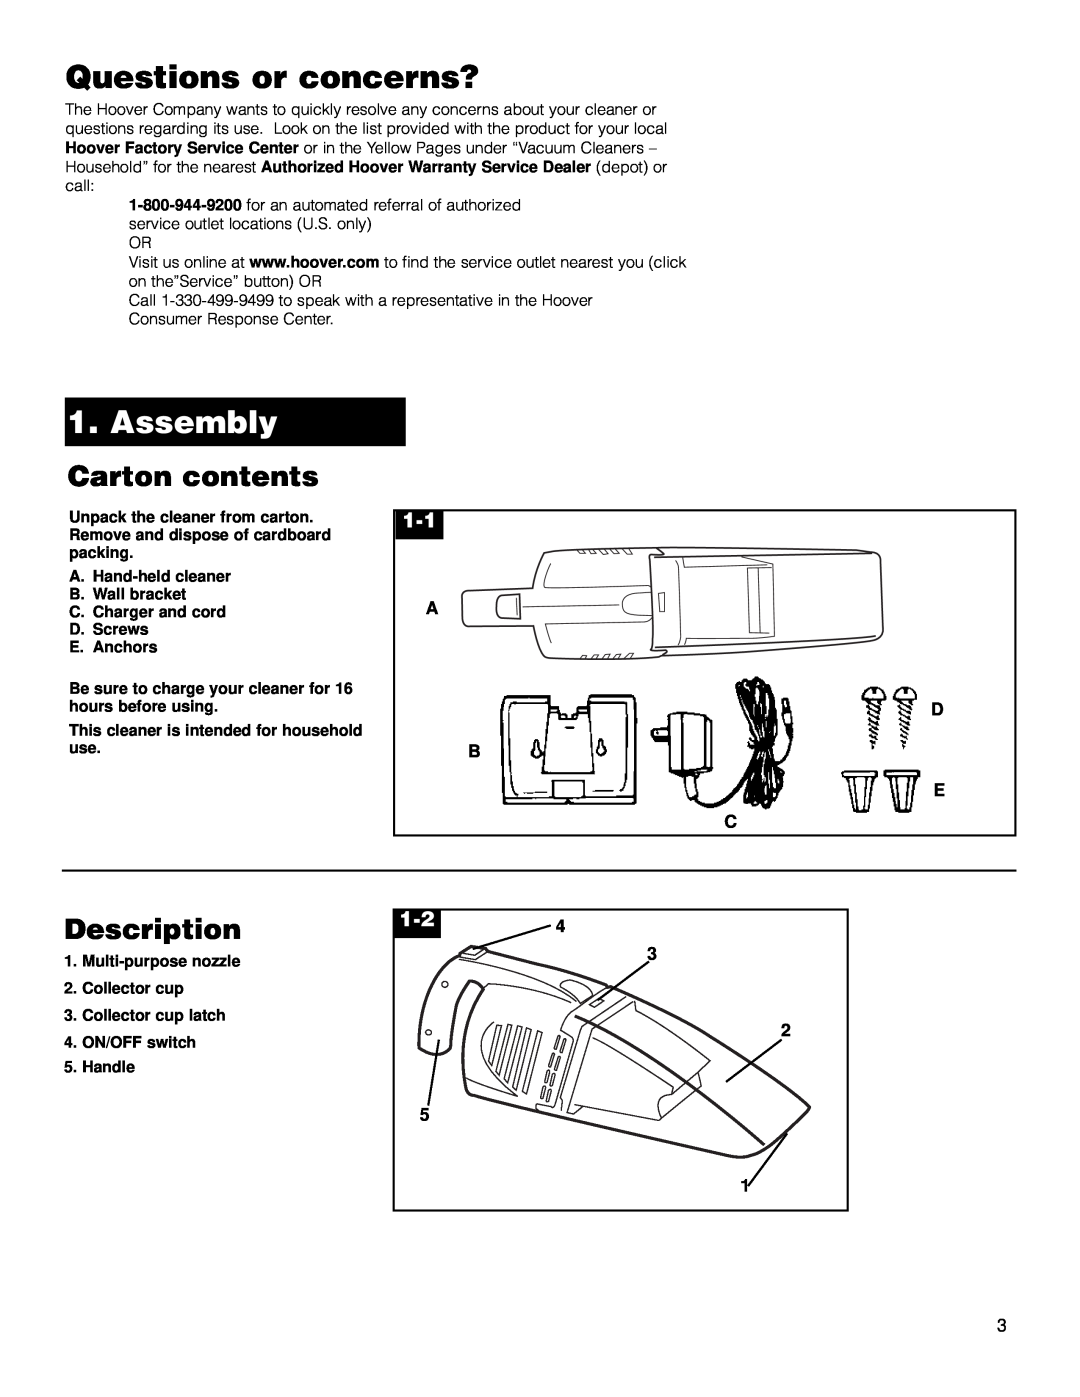 Hoover HandVac owner manual Questions or concerns?, Assembly, Carton contents, Description 